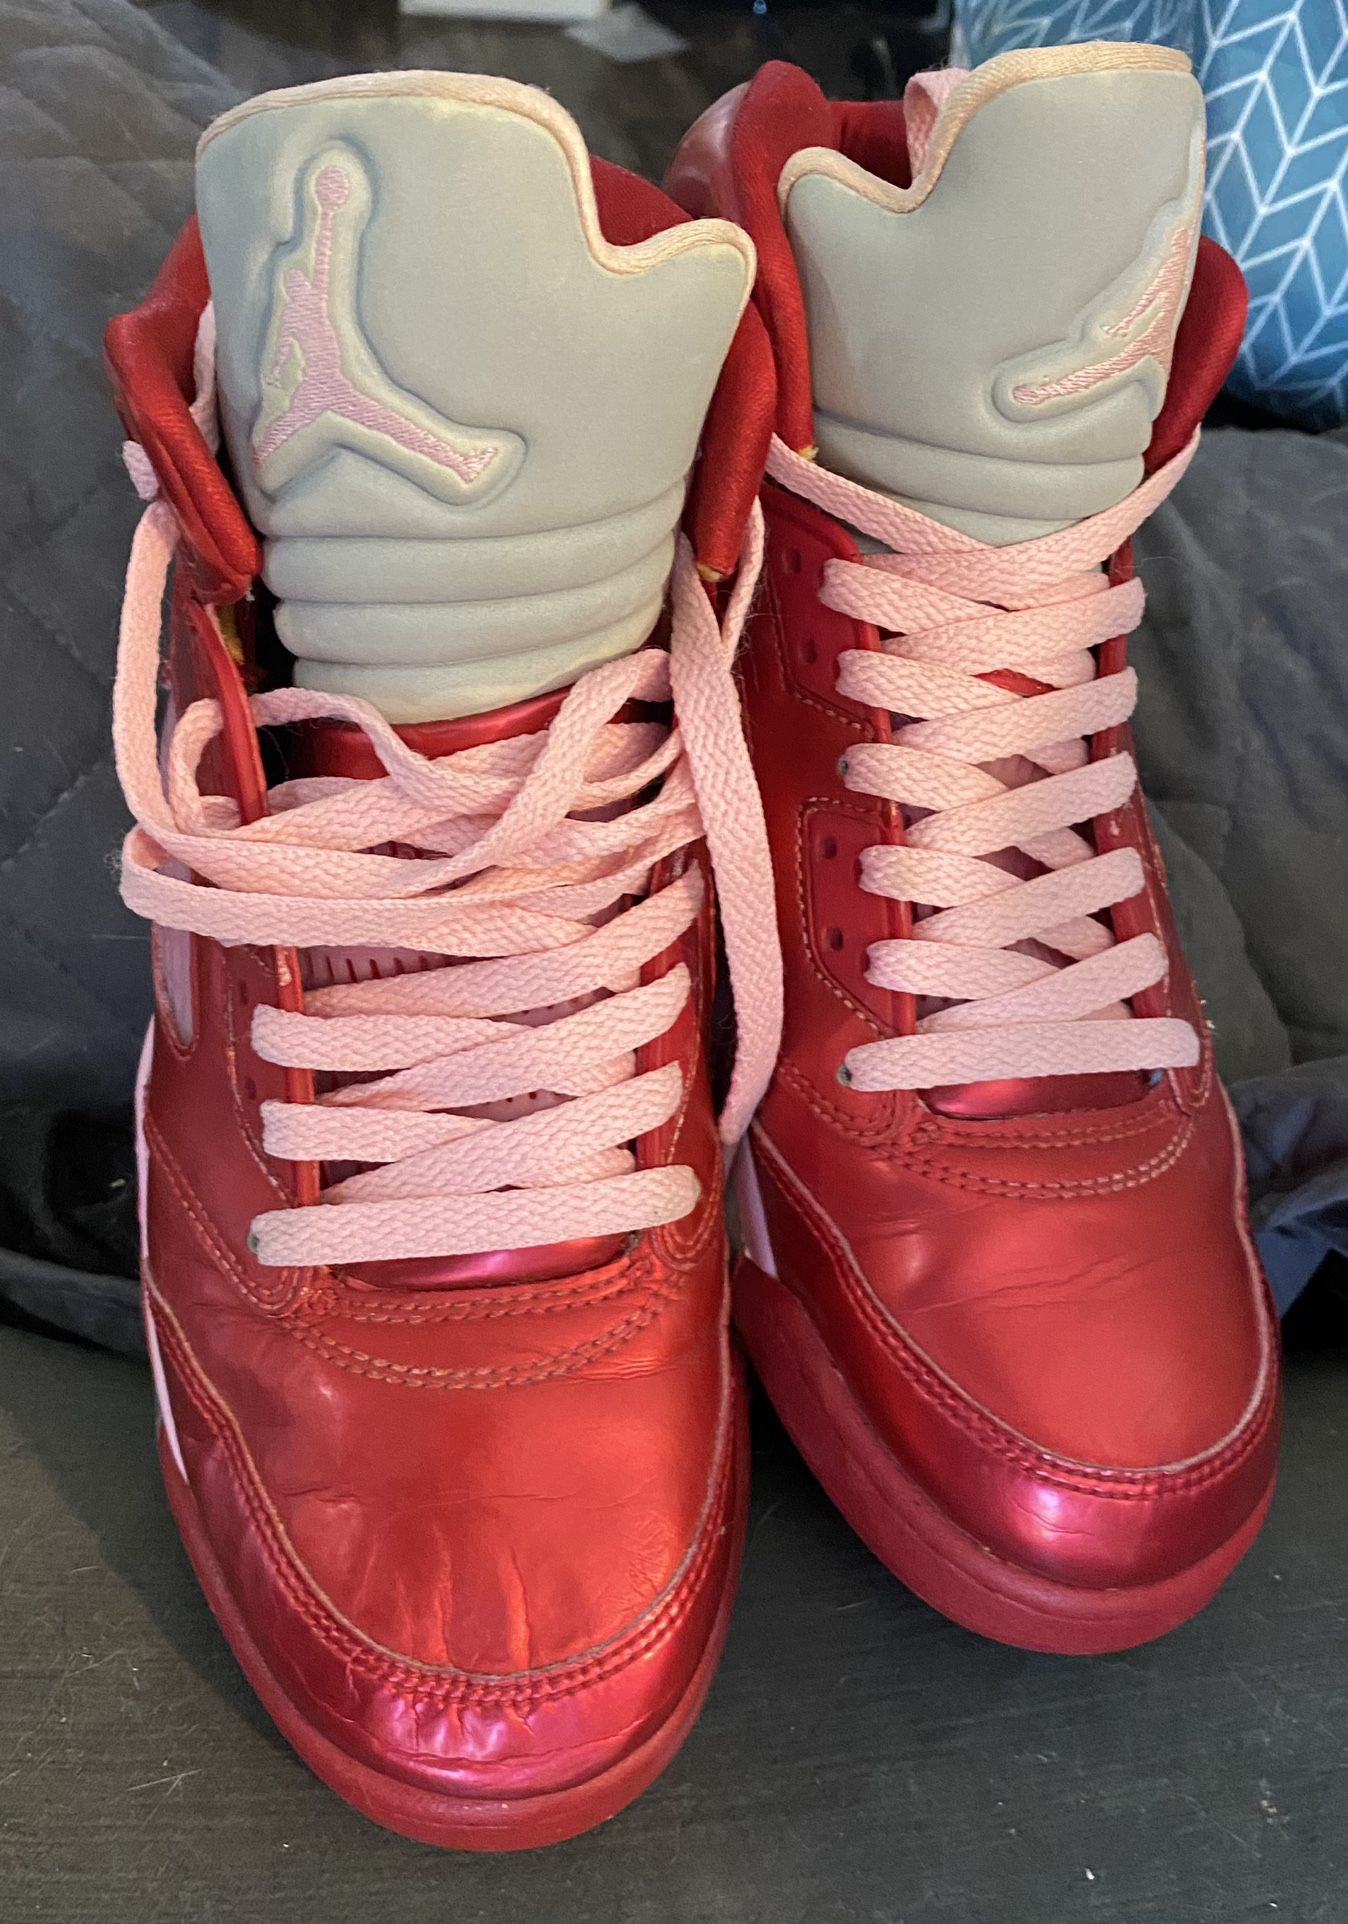 Jordan 5 Retro Mid Valentines Day Edition Size 5-1/2